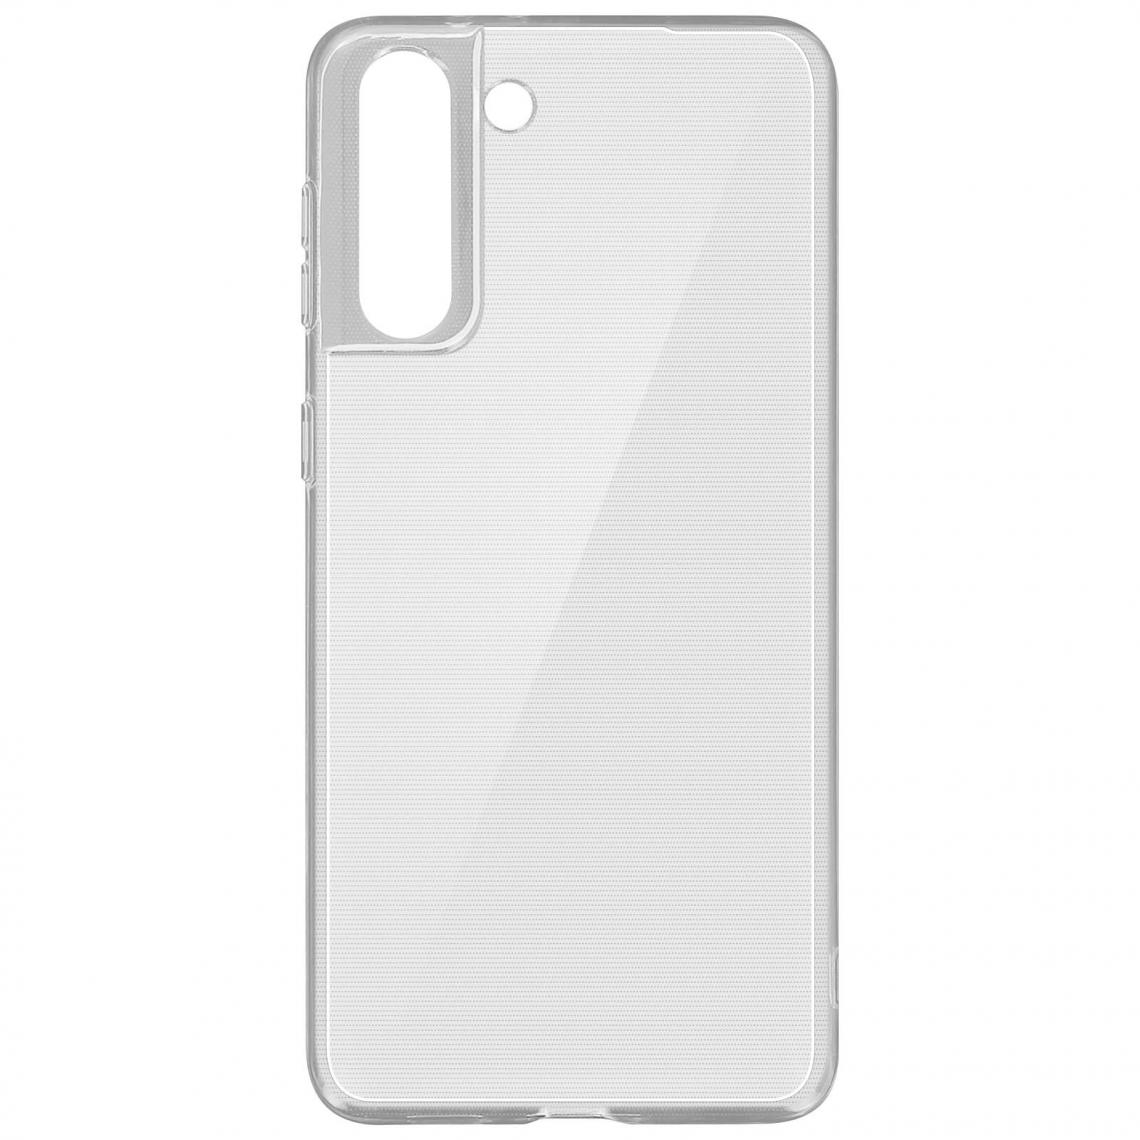 Avizar - Coque Samsung Galaxy S21 Plus Protection Silicone Souple Design Slim Transparent - Coque, étui smartphone